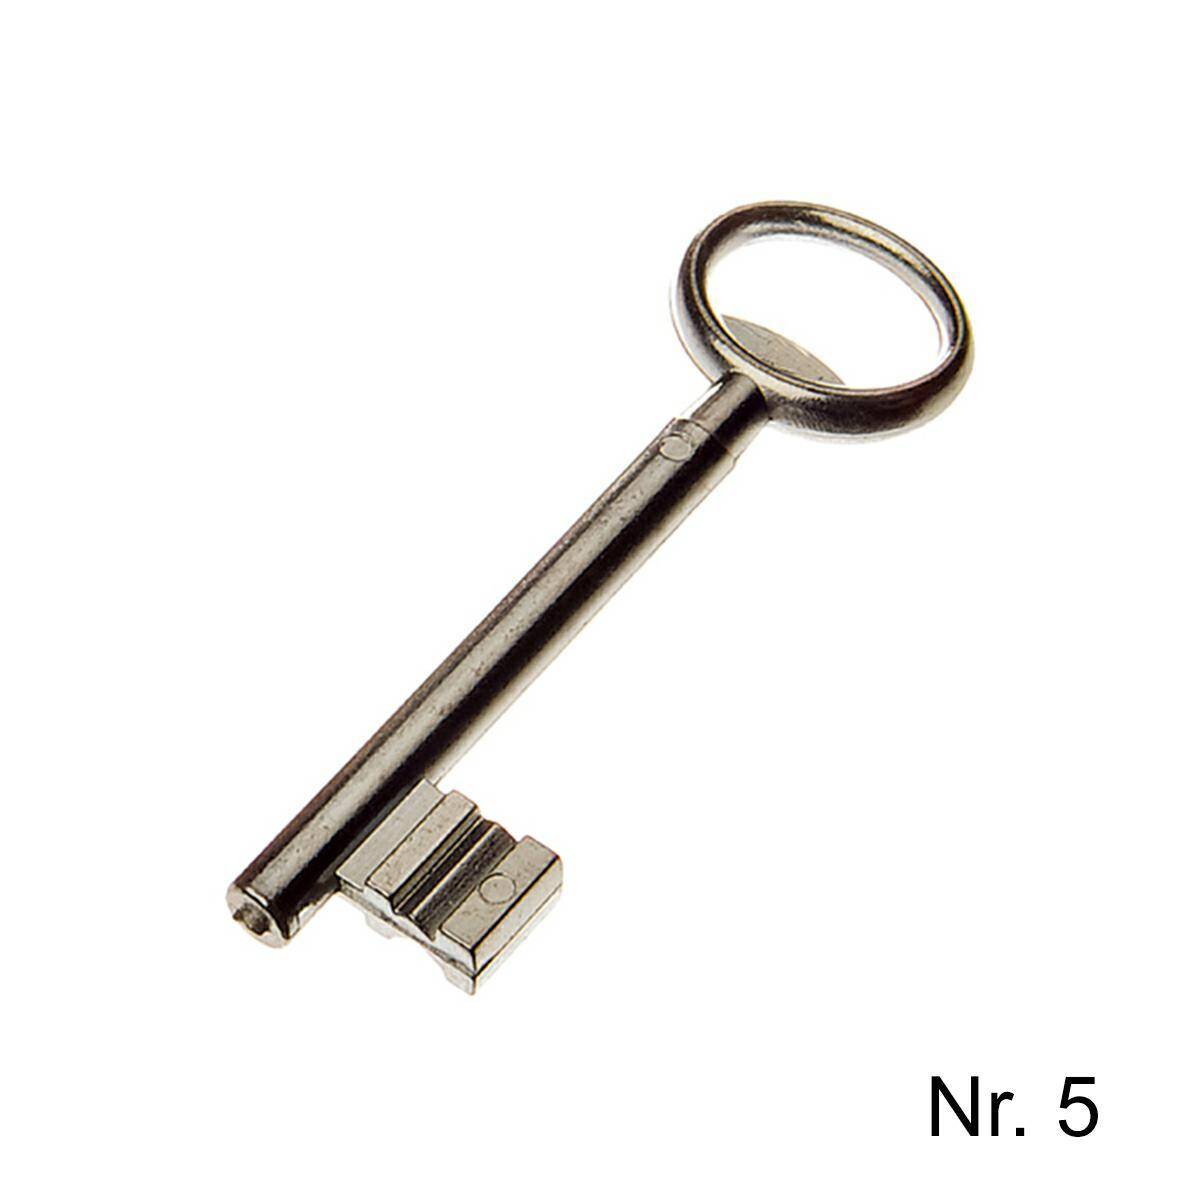 Cast key Jania for the lock - No. 5